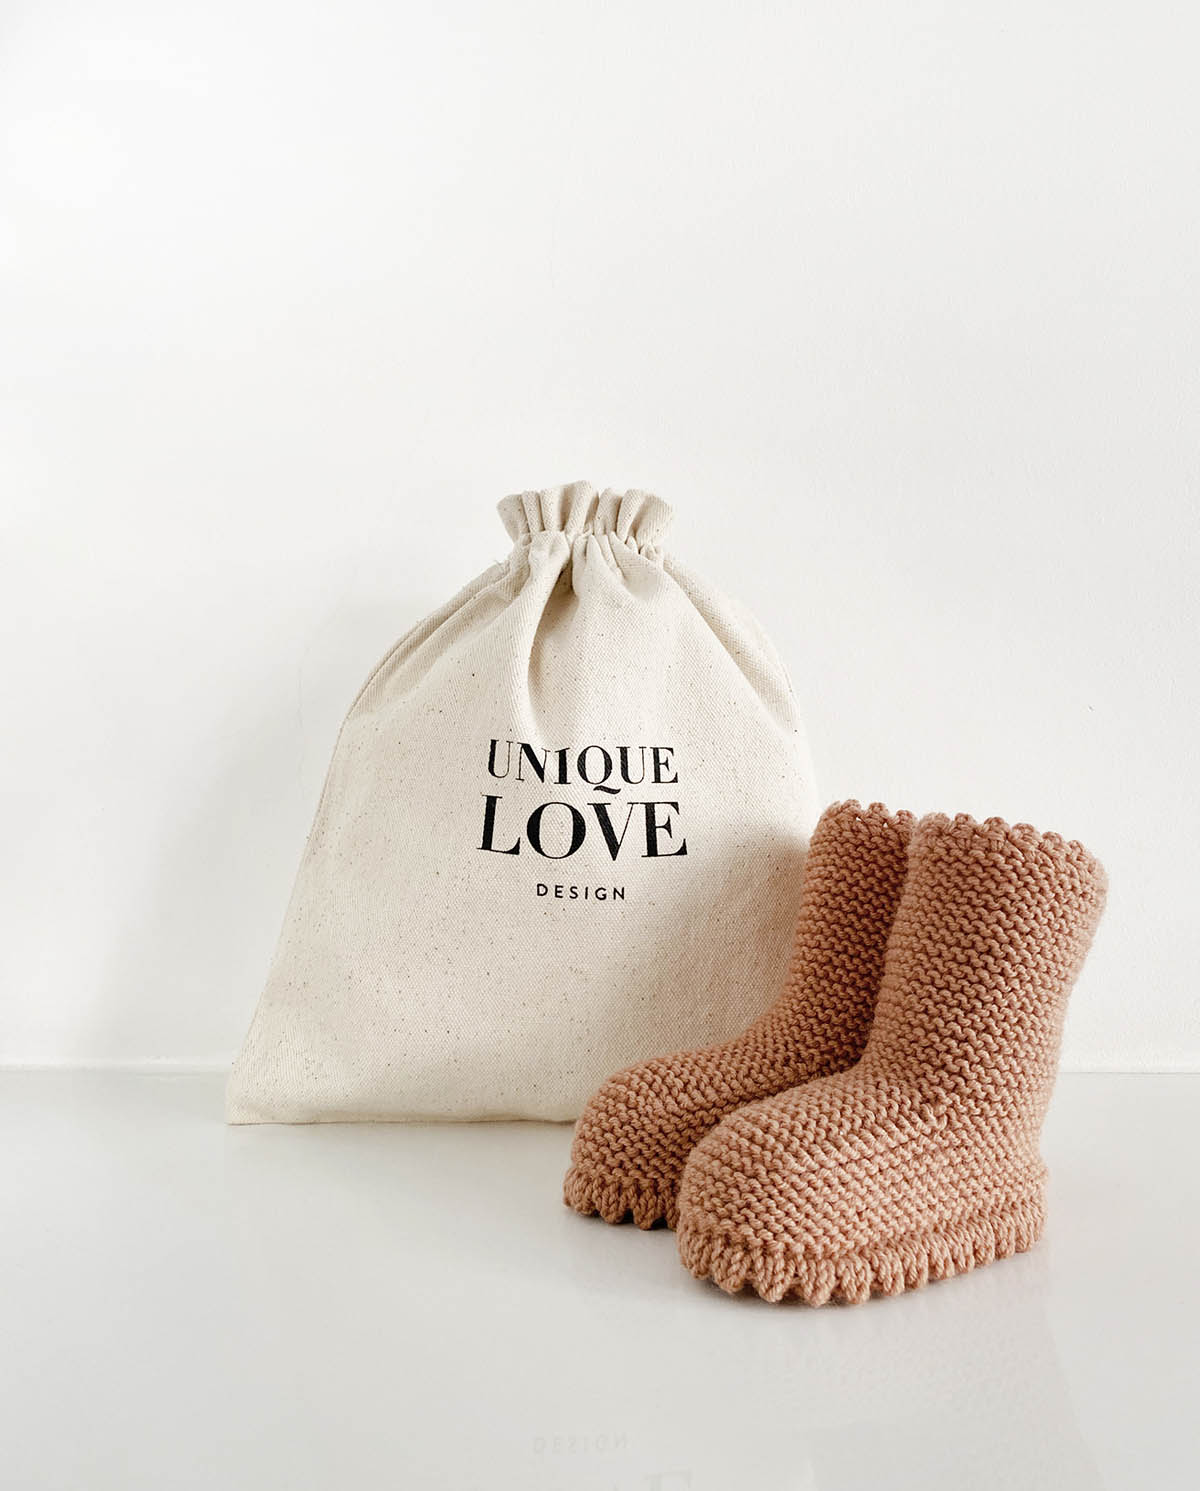 UNIQUE LOVE Strickschuhe Caramel - Bequeme Knit-Boots für jeden Tag